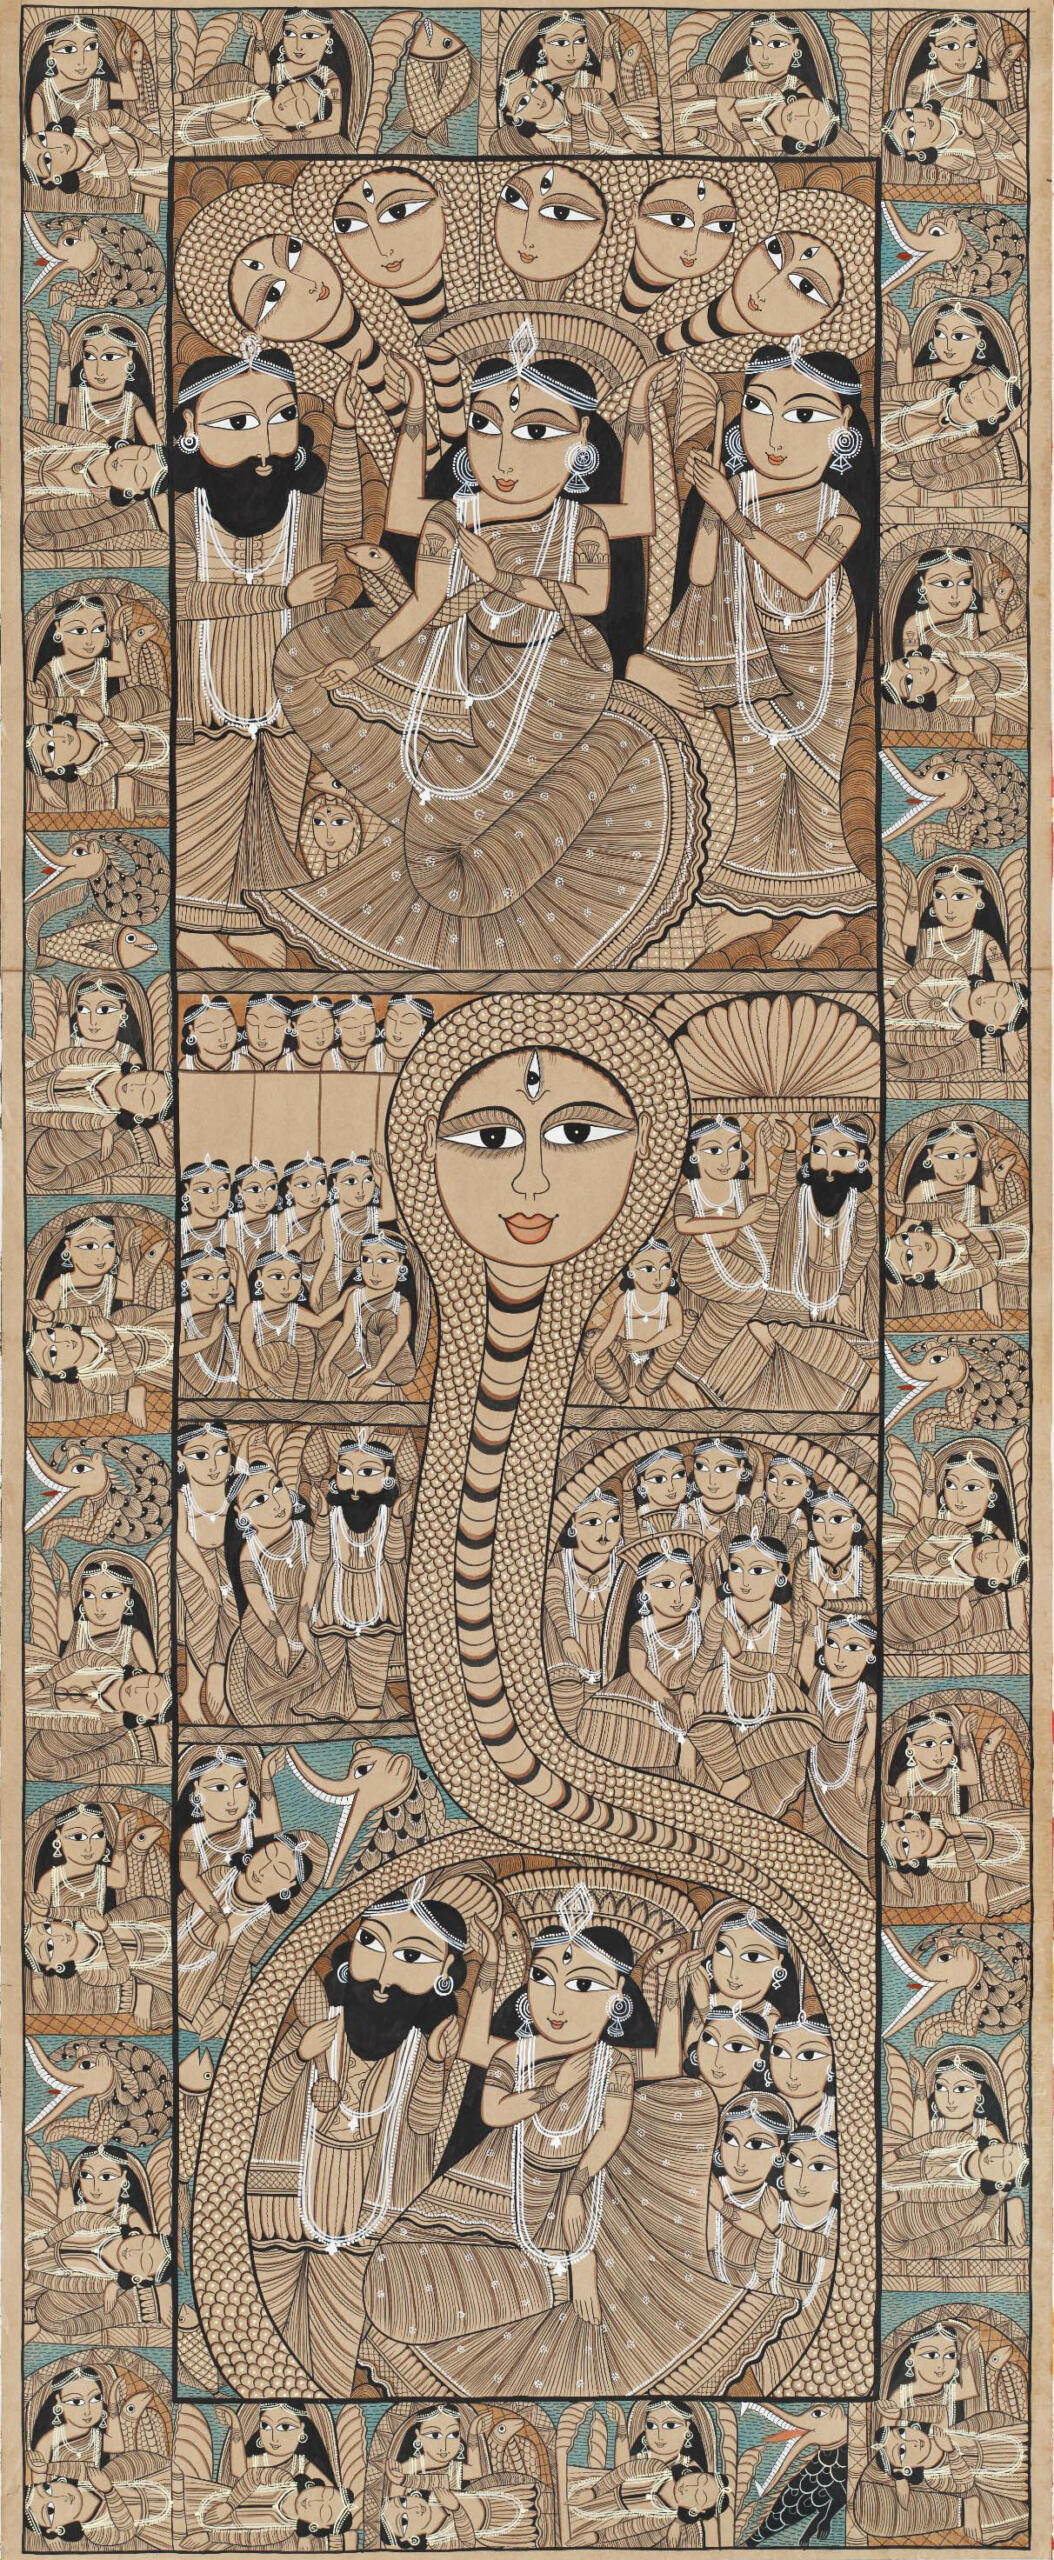 Miracle cure – Goddesses of health - Adivasi, Arts of India, Bahujan, Dalit, epidemic, featured, Goddess, Hadaksha Mata, healing, Jesus Christ, Kalighat, Mata ni Pachedi, Mother Mary, Olabibi, Oladevi, pandemic, Shitala Devi